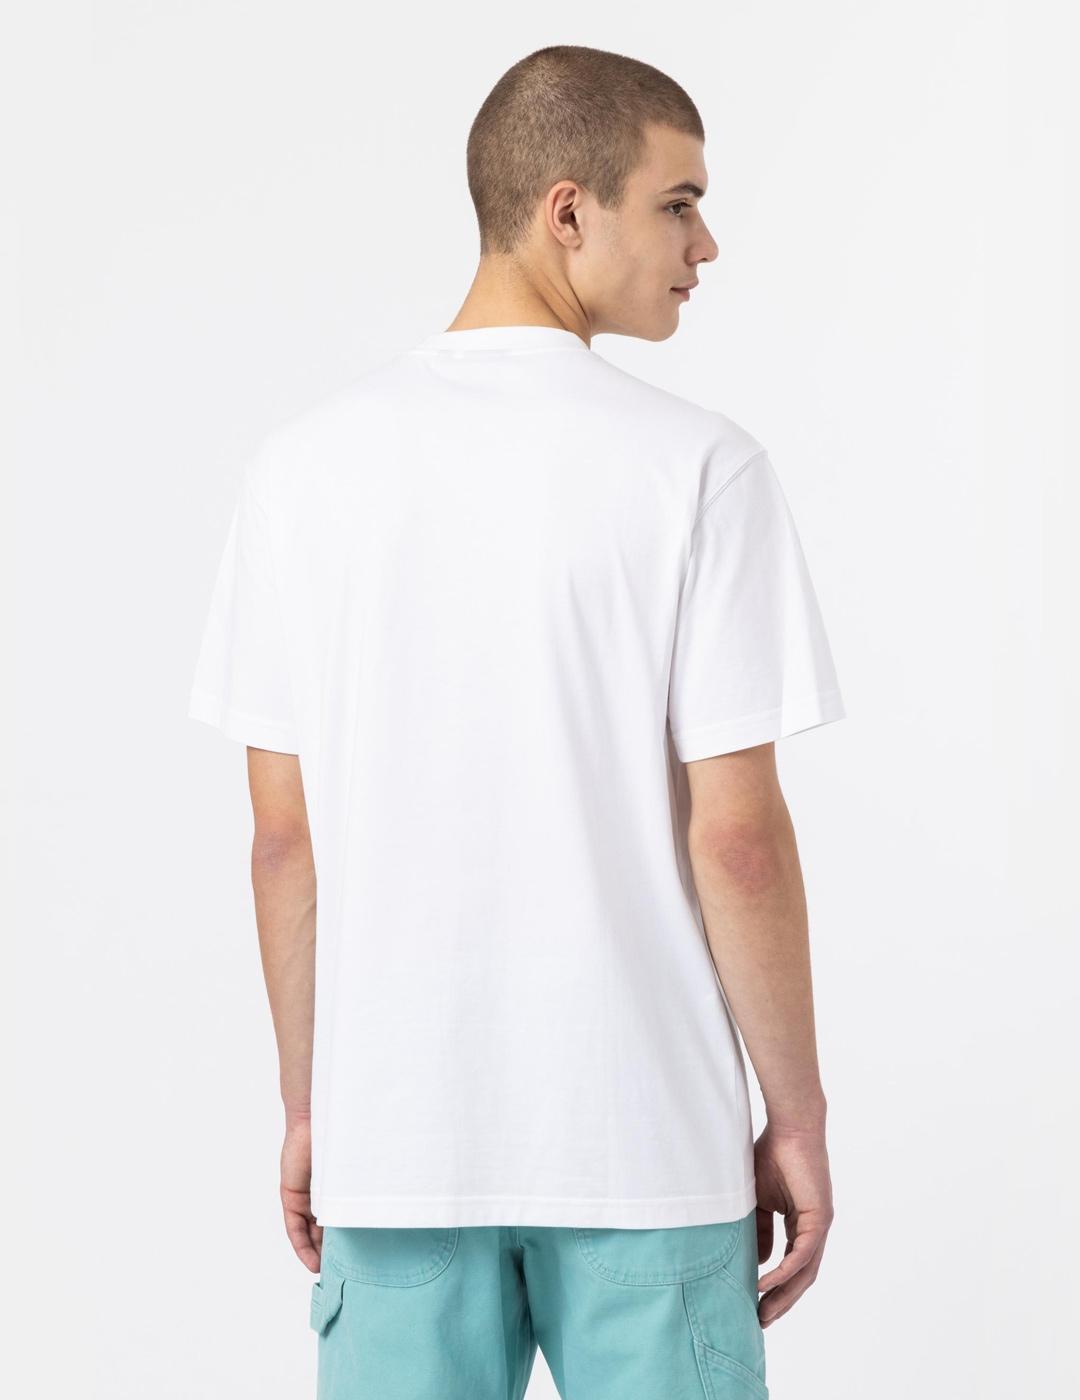 Camiseta DICKIES SKATEBOARDING MOUNT VISTA - White